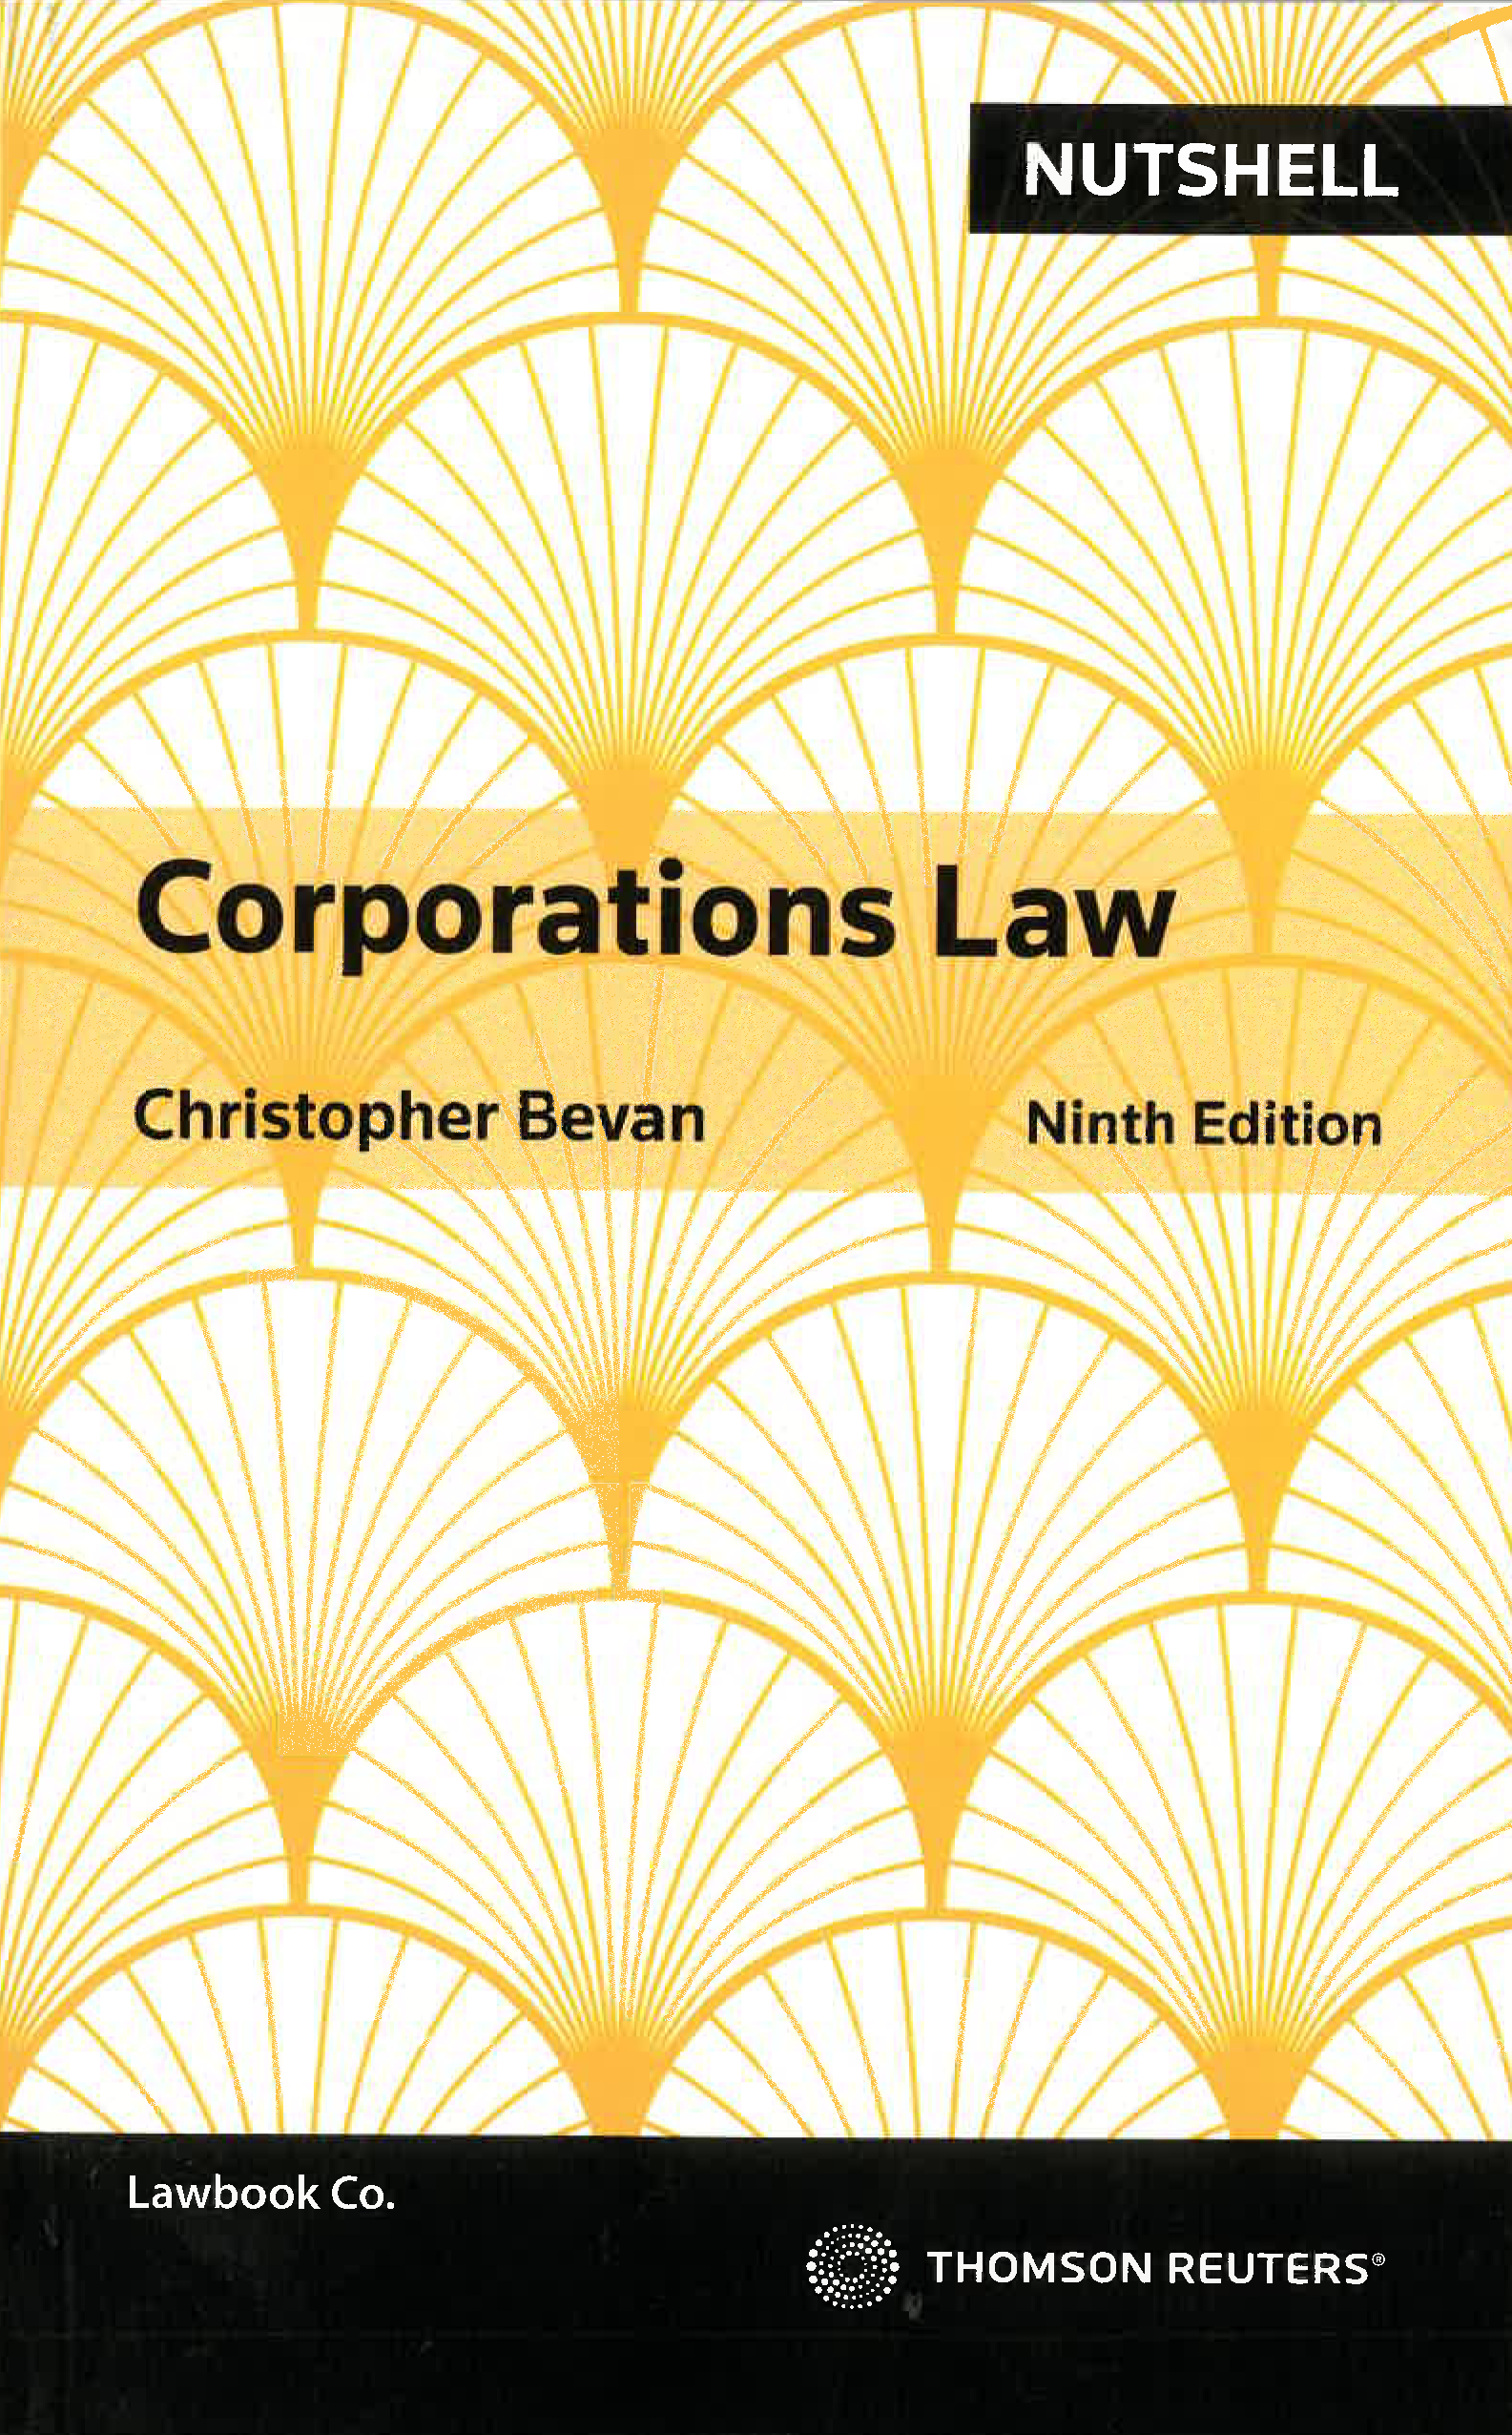 Corporations Law e9 (Nutshell Series)